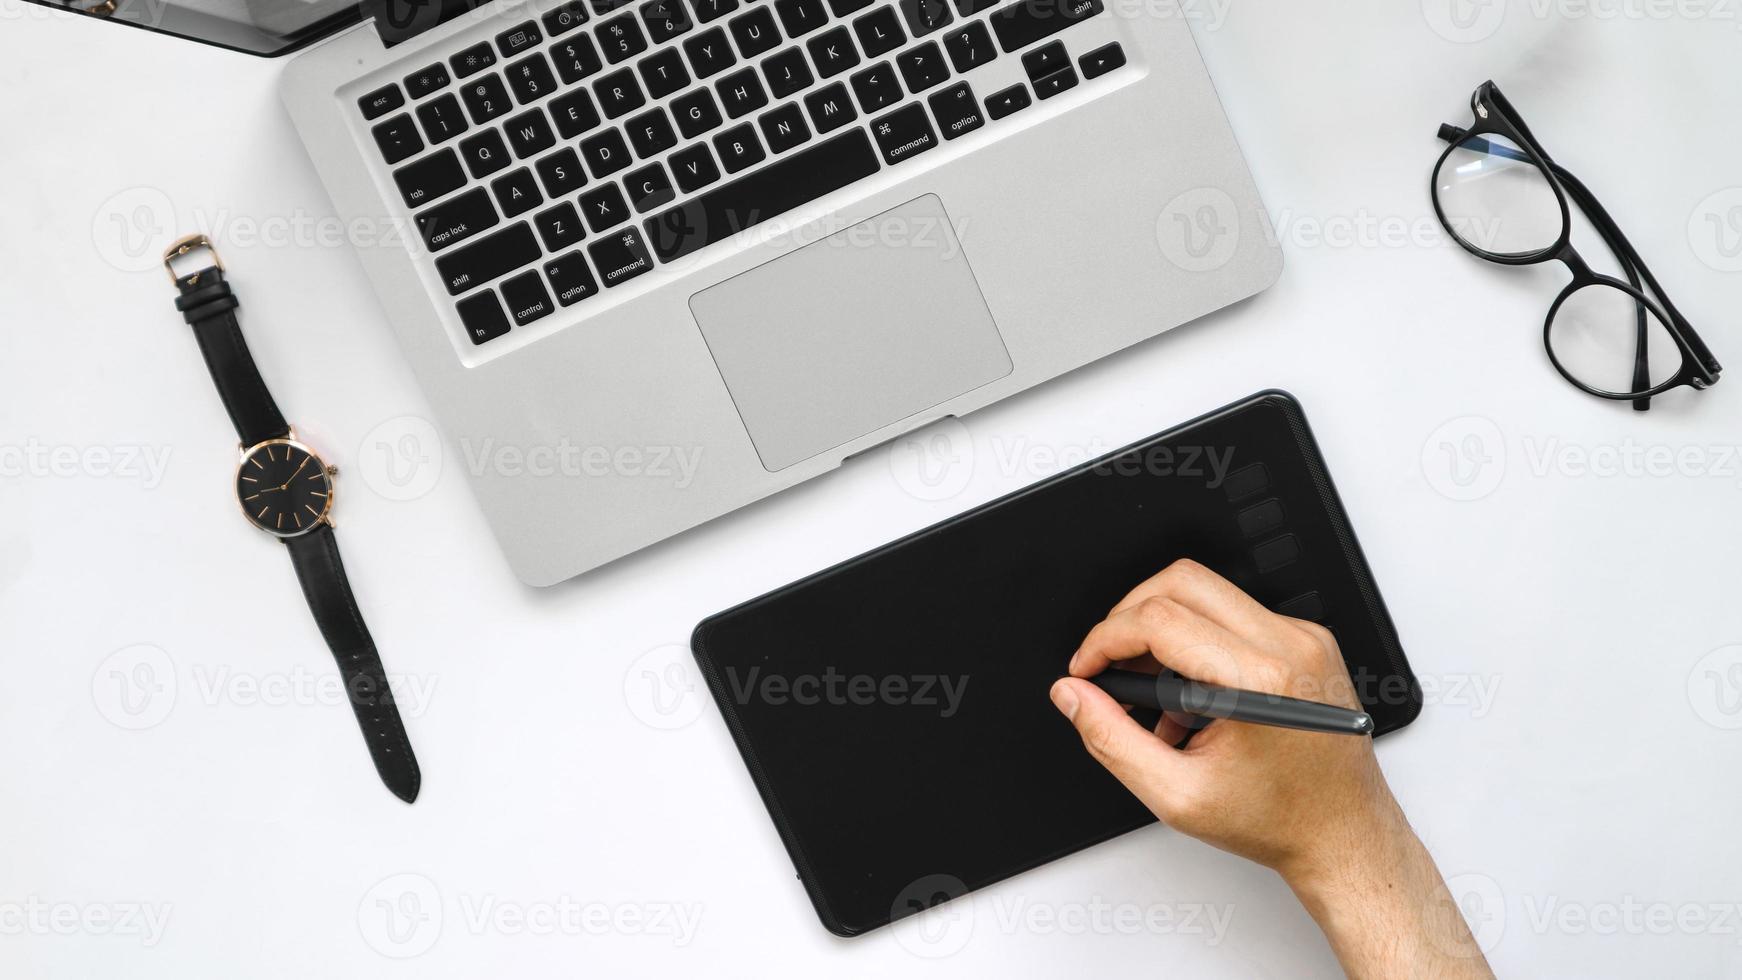 Vista de tabla de portátil, tableta digitalizadora y reloj de pulsera sobre fondo blanco. foto